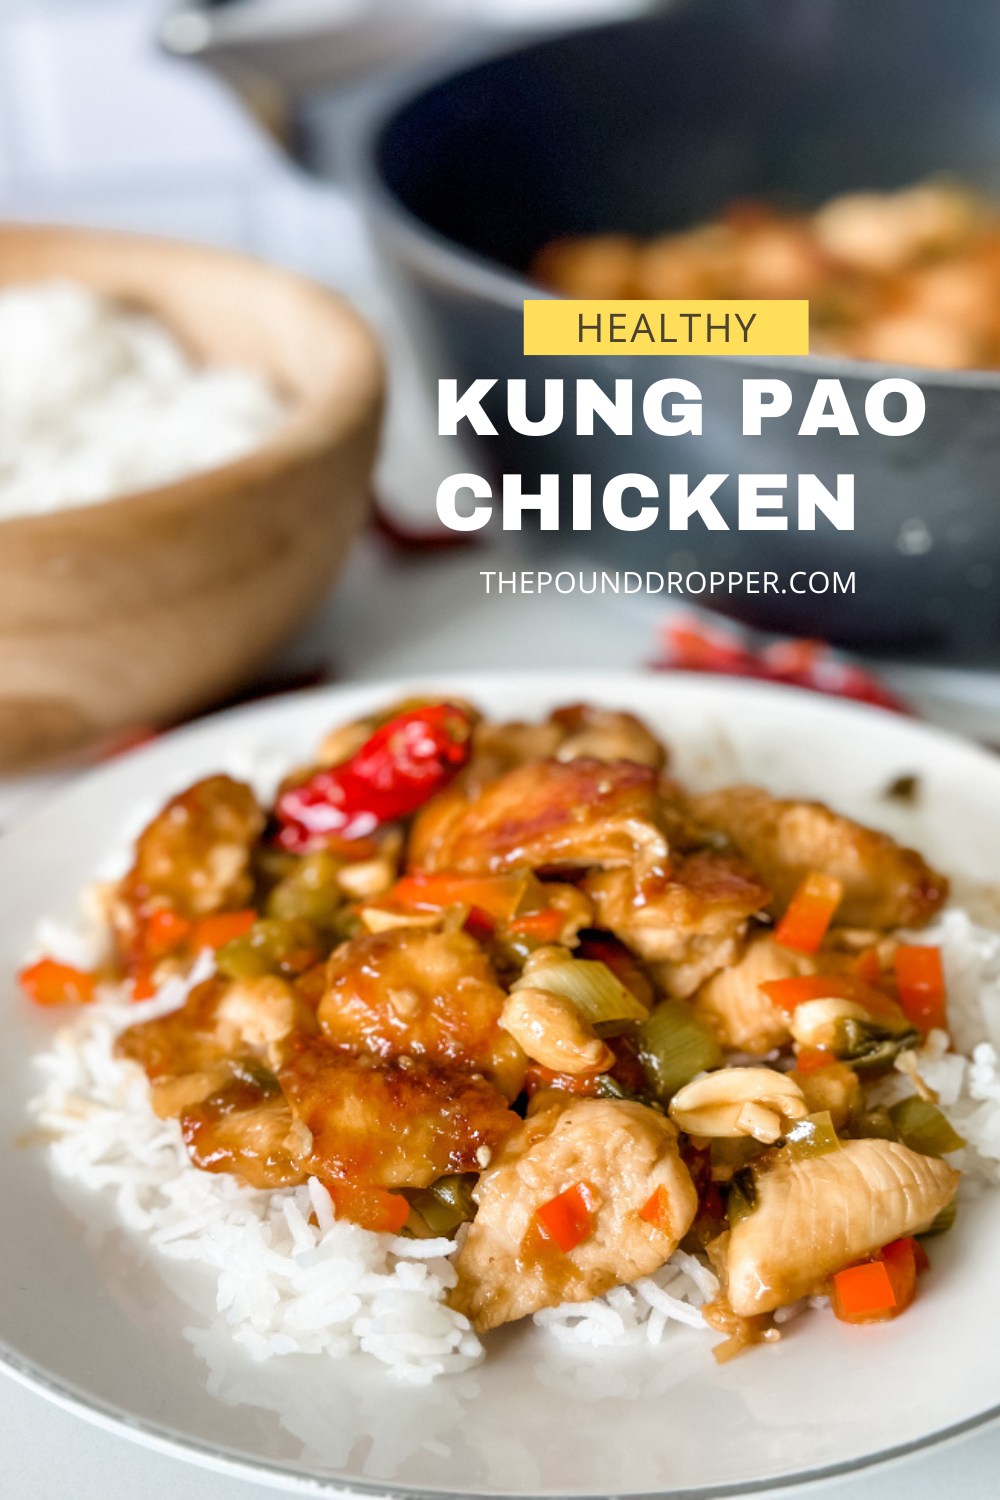 Kung Pao Chicken via @pounddropper